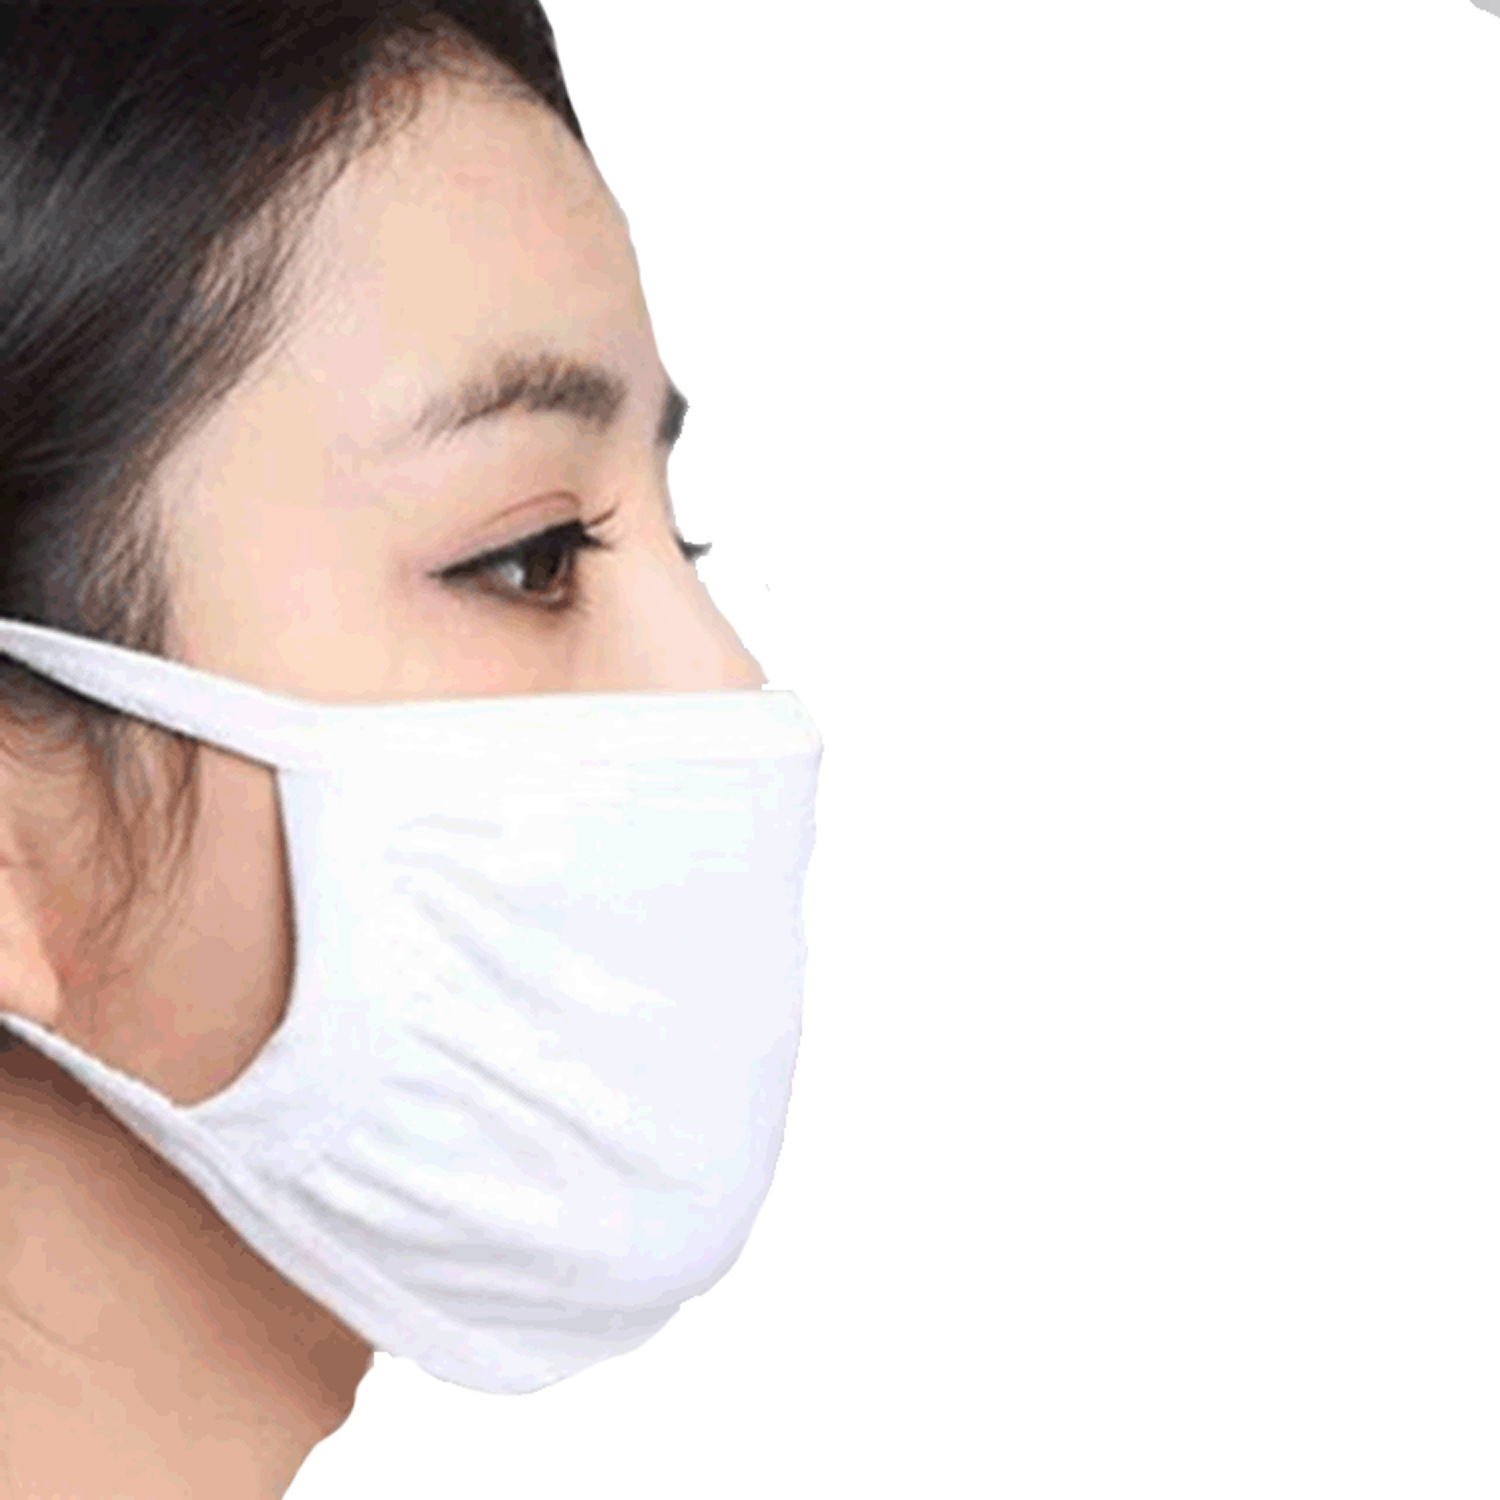 

Black Face mask Cycling Wearing Anti-Dust Cotton Mouth Face Mask PM 2.5 Mask Unisex Man Woman Black White Fashion free shipping